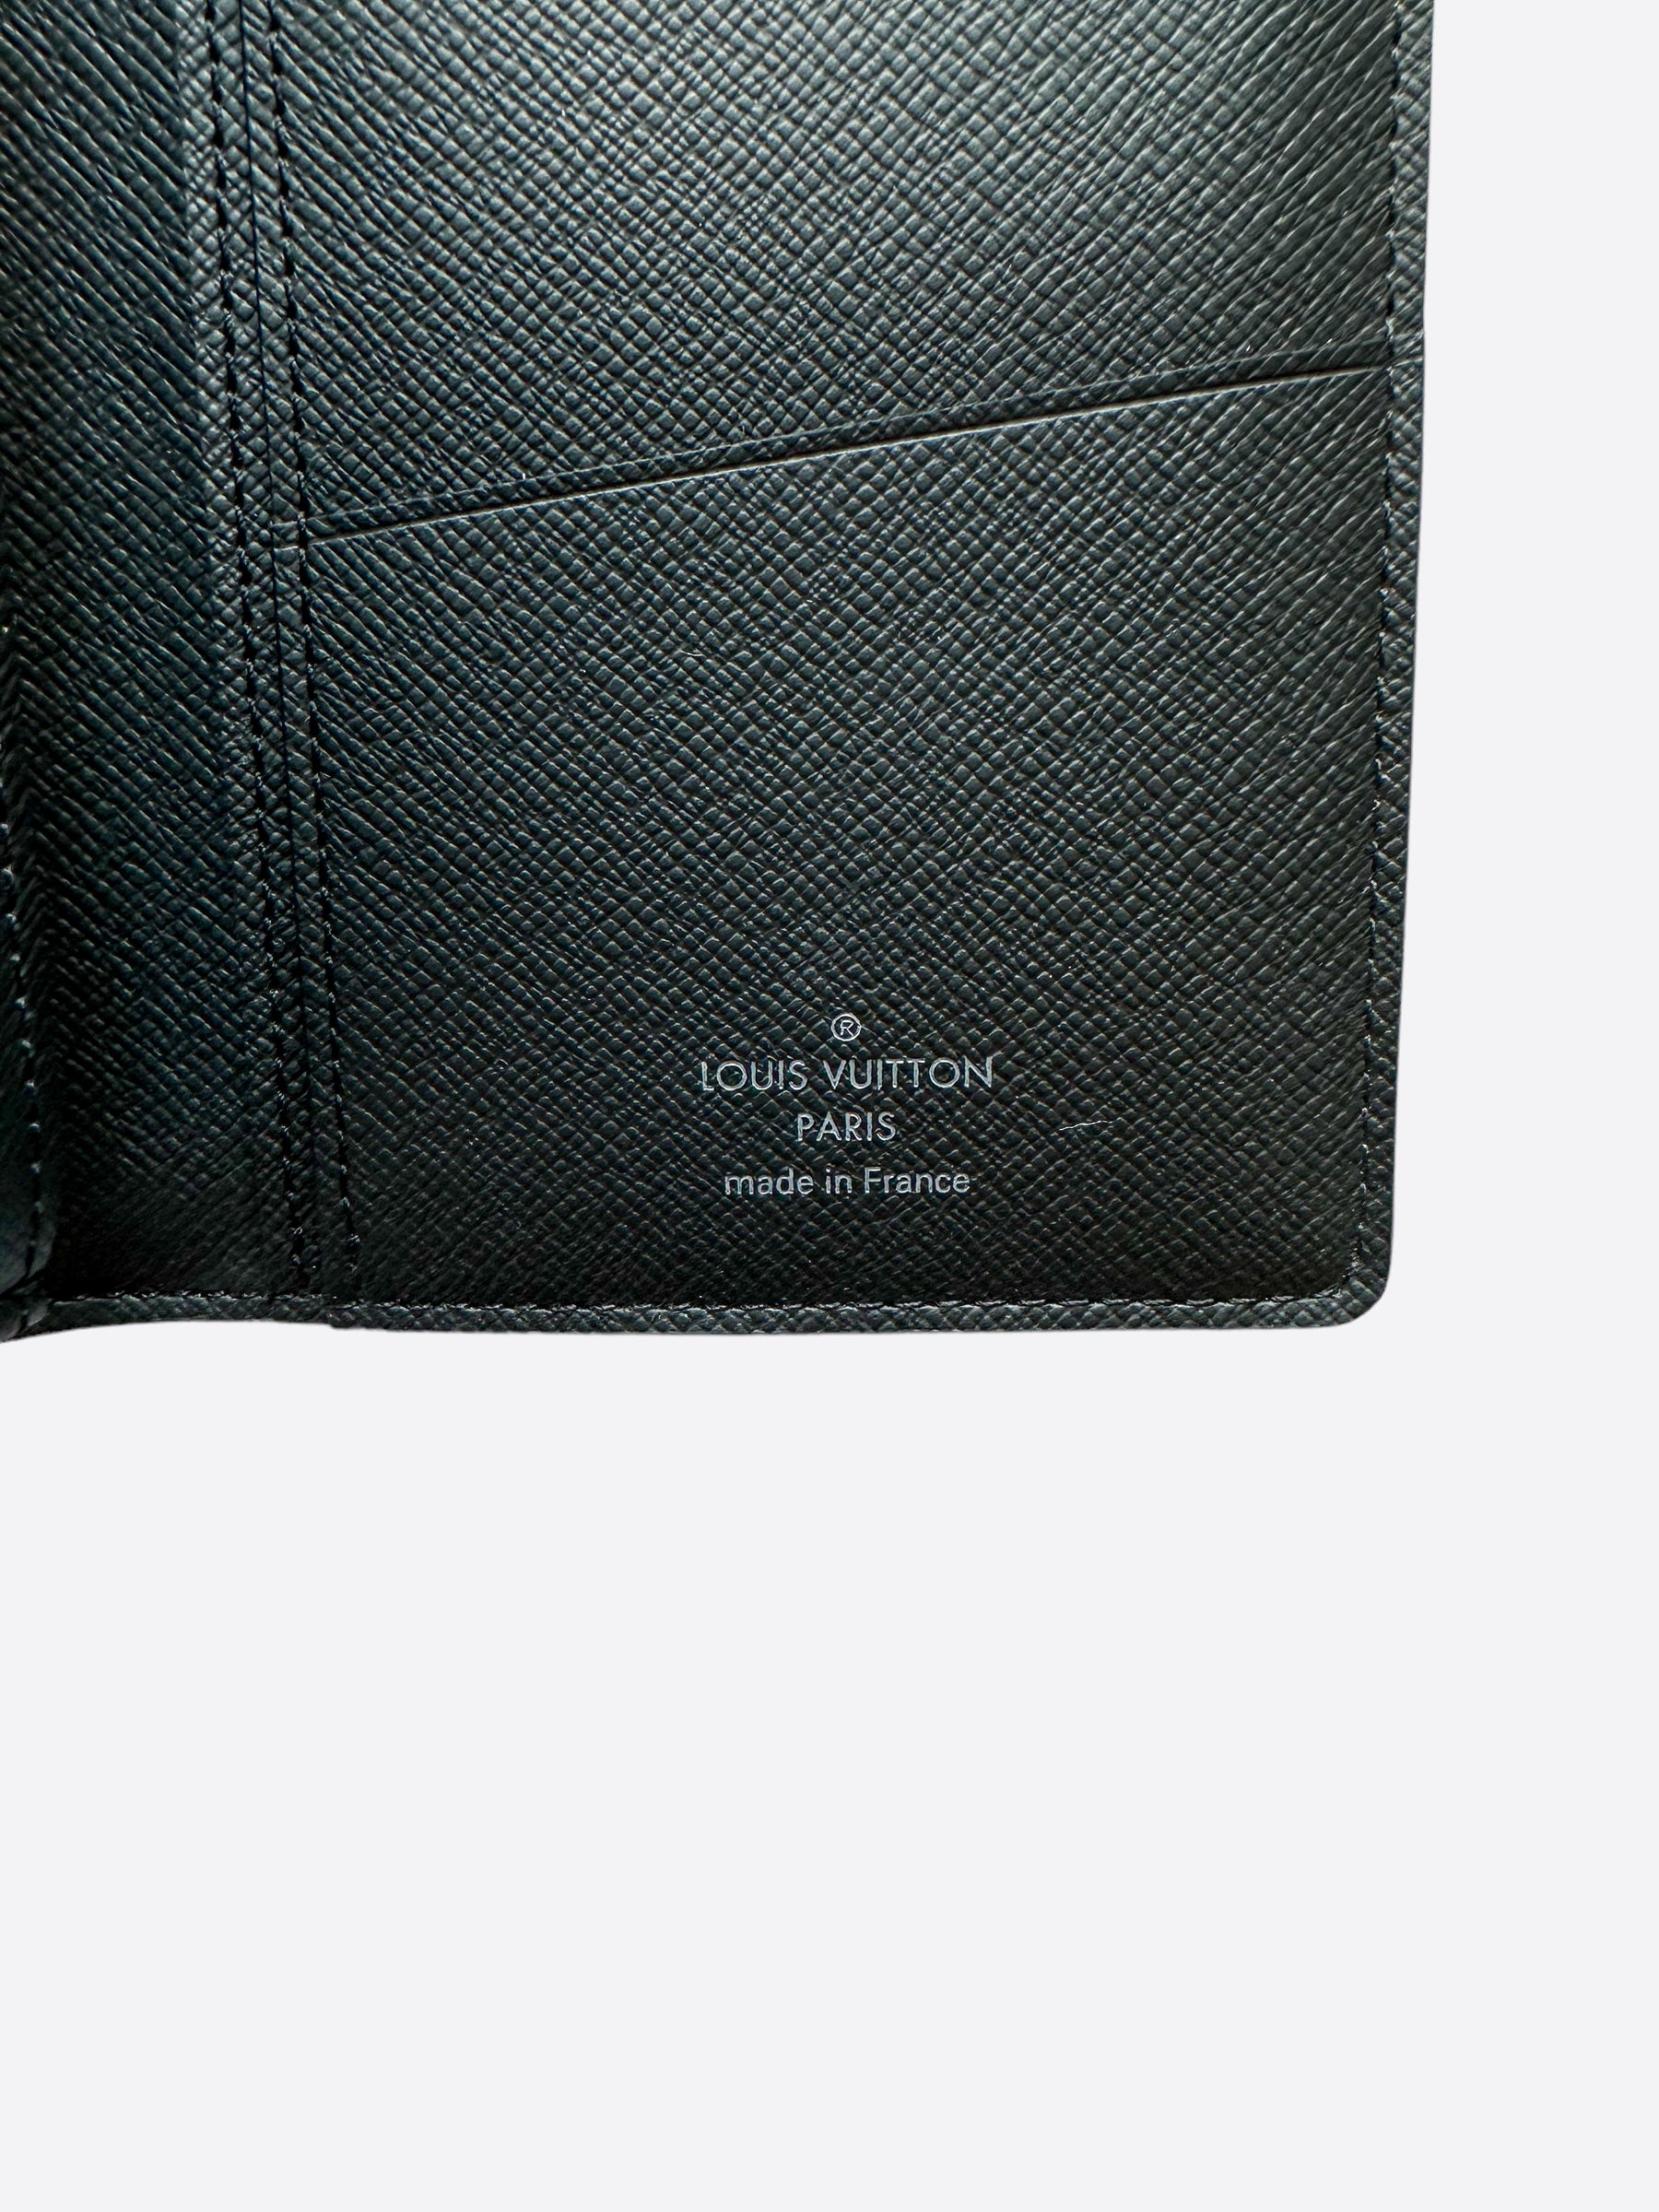 Louis Vuitton x Nigo Duck Bag Monogram Brown in Leather with Gold